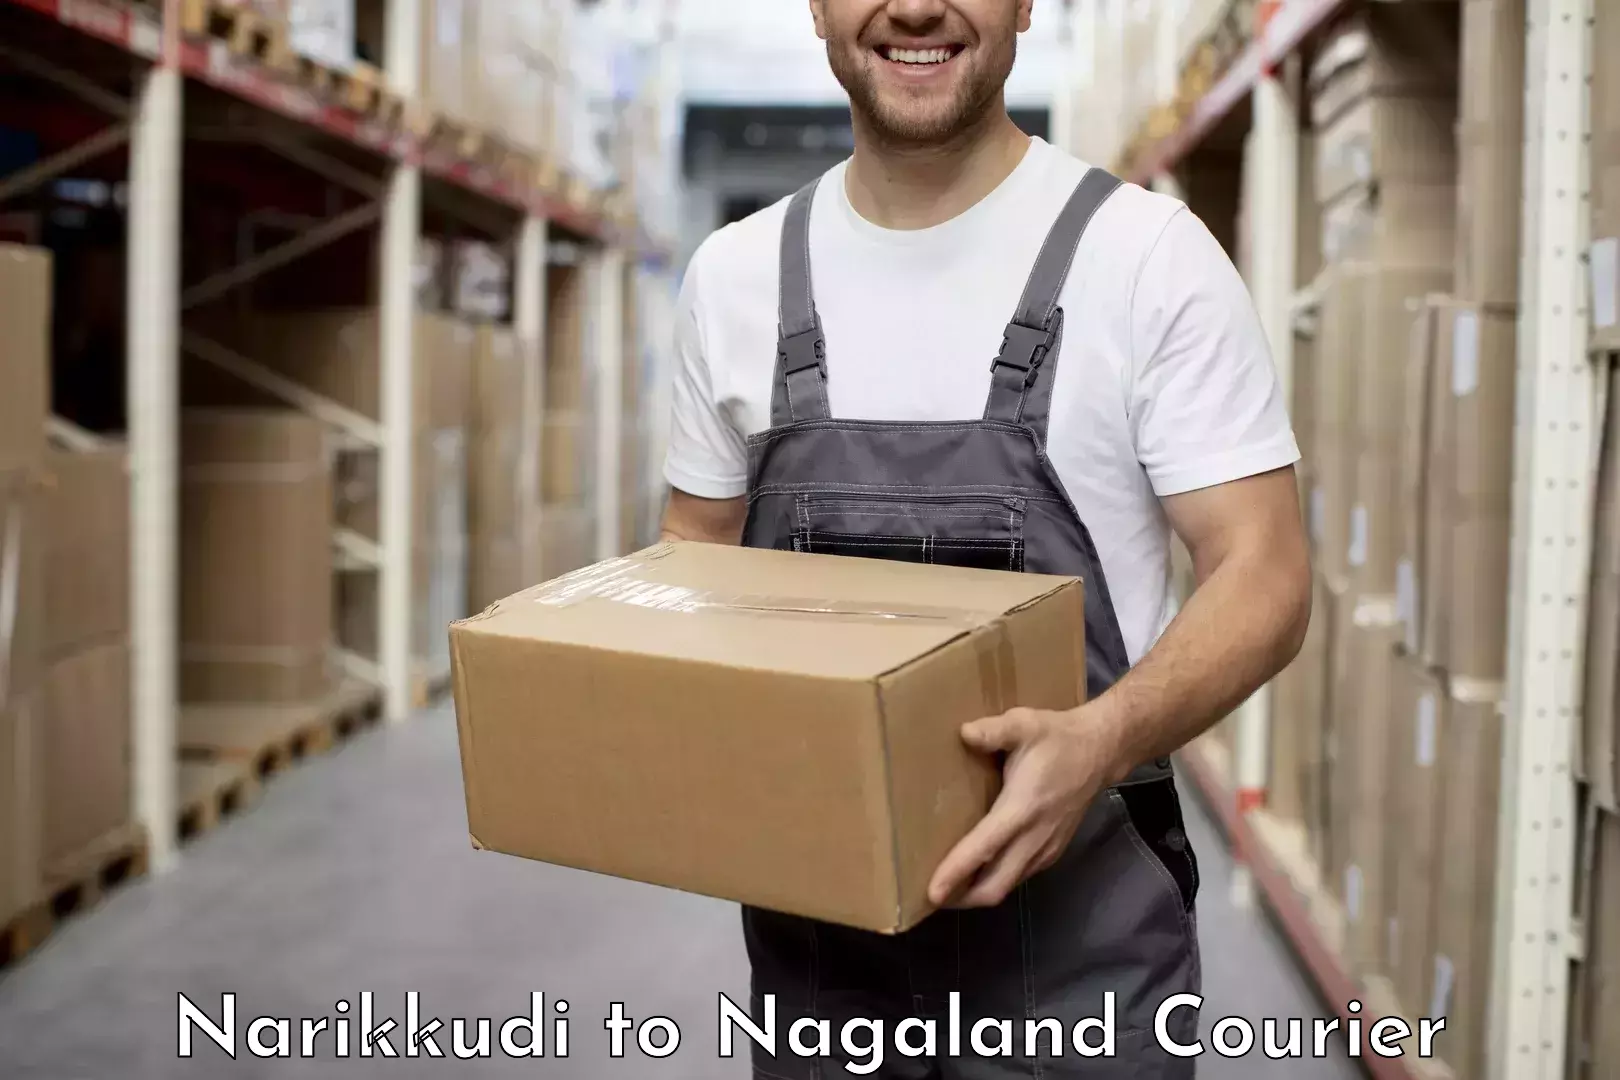 Cargo delivery service Narikkudi to Mon